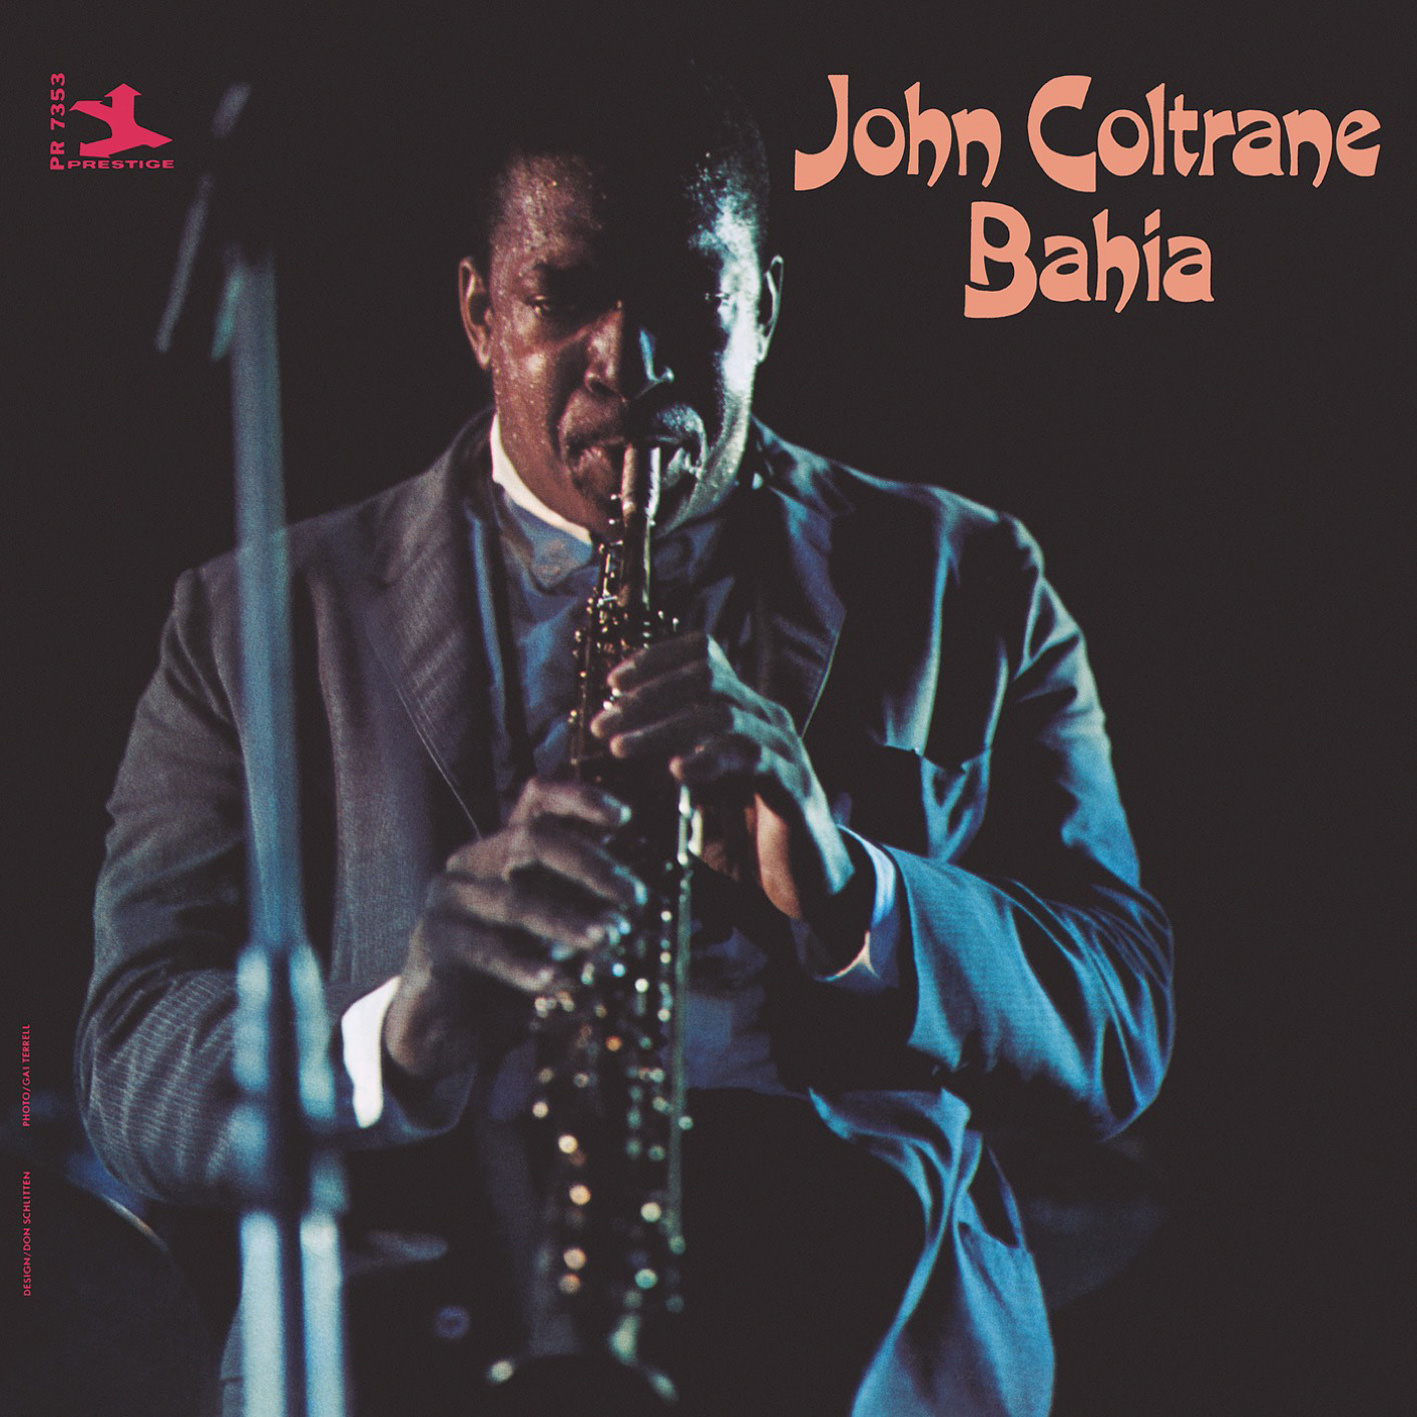 John Coltrane - Bahia (1965/2016) [HDTracks FLAC 24bit/192kHz]